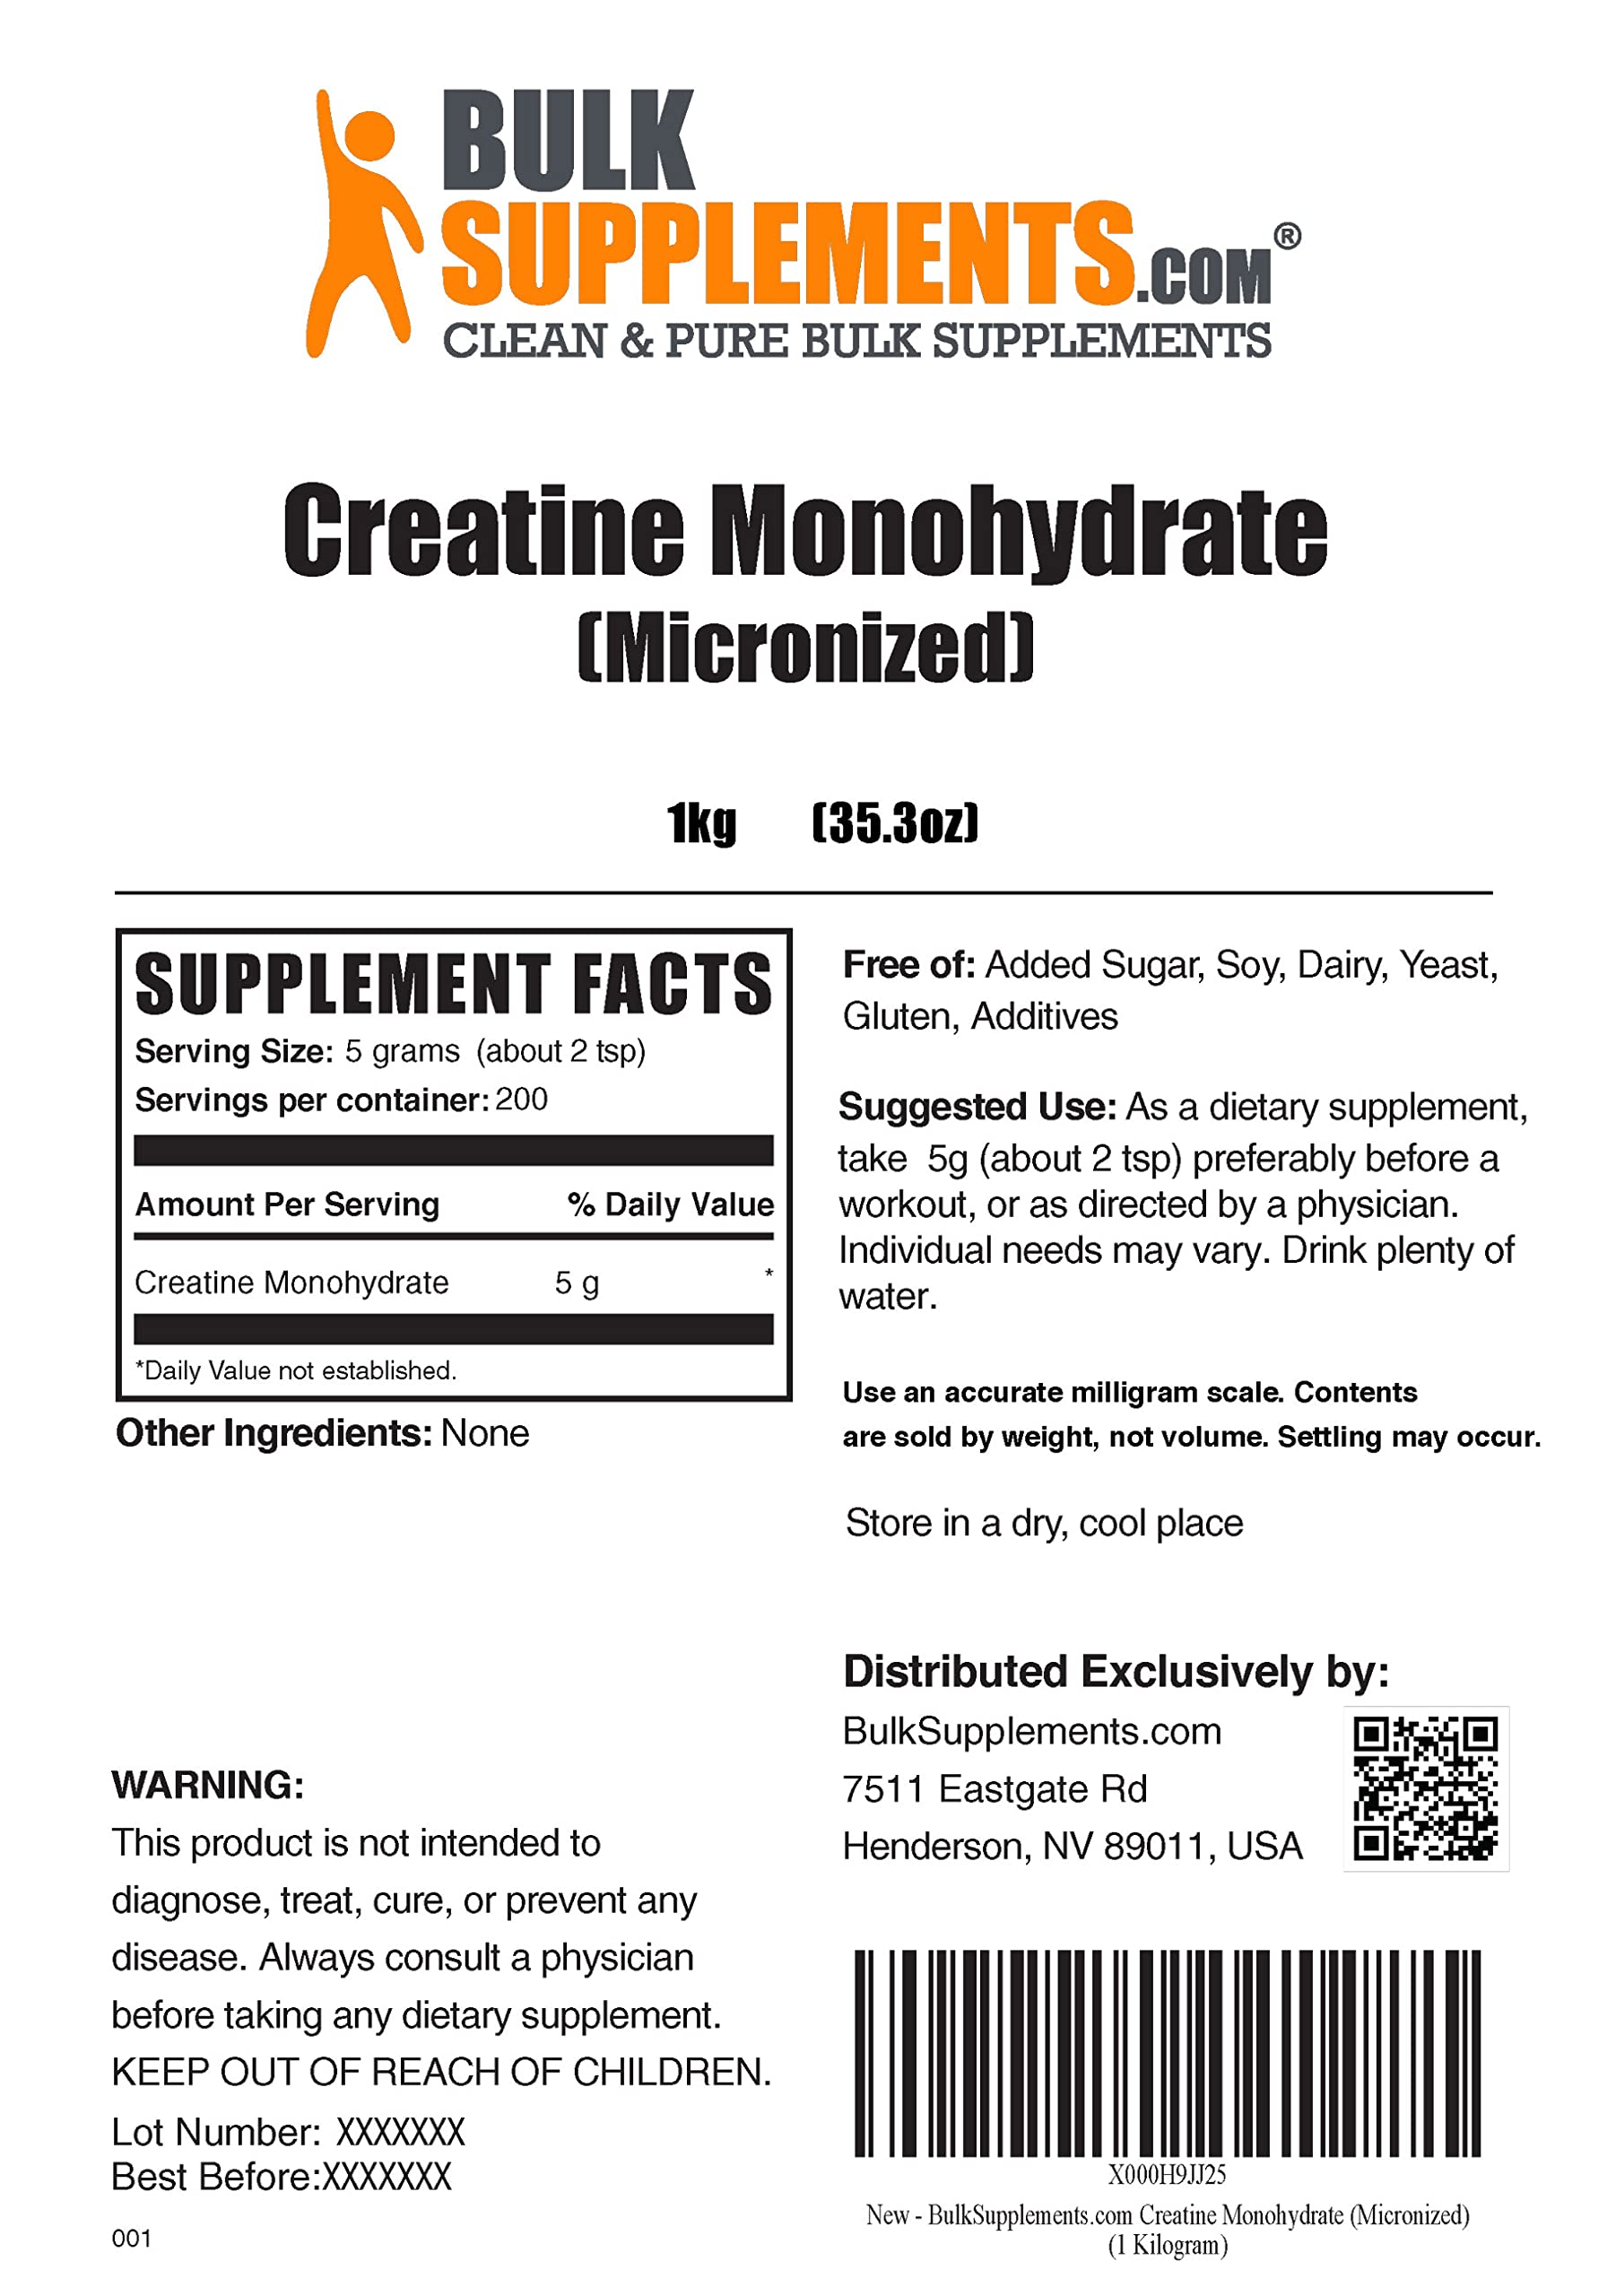 BULKSUPPLEMENTS.COM Essential Amino Acids Powder (EAA Powder) 1KG & Creatine Monohydrate Powder (Micronized Creatine) 1KG Bundle